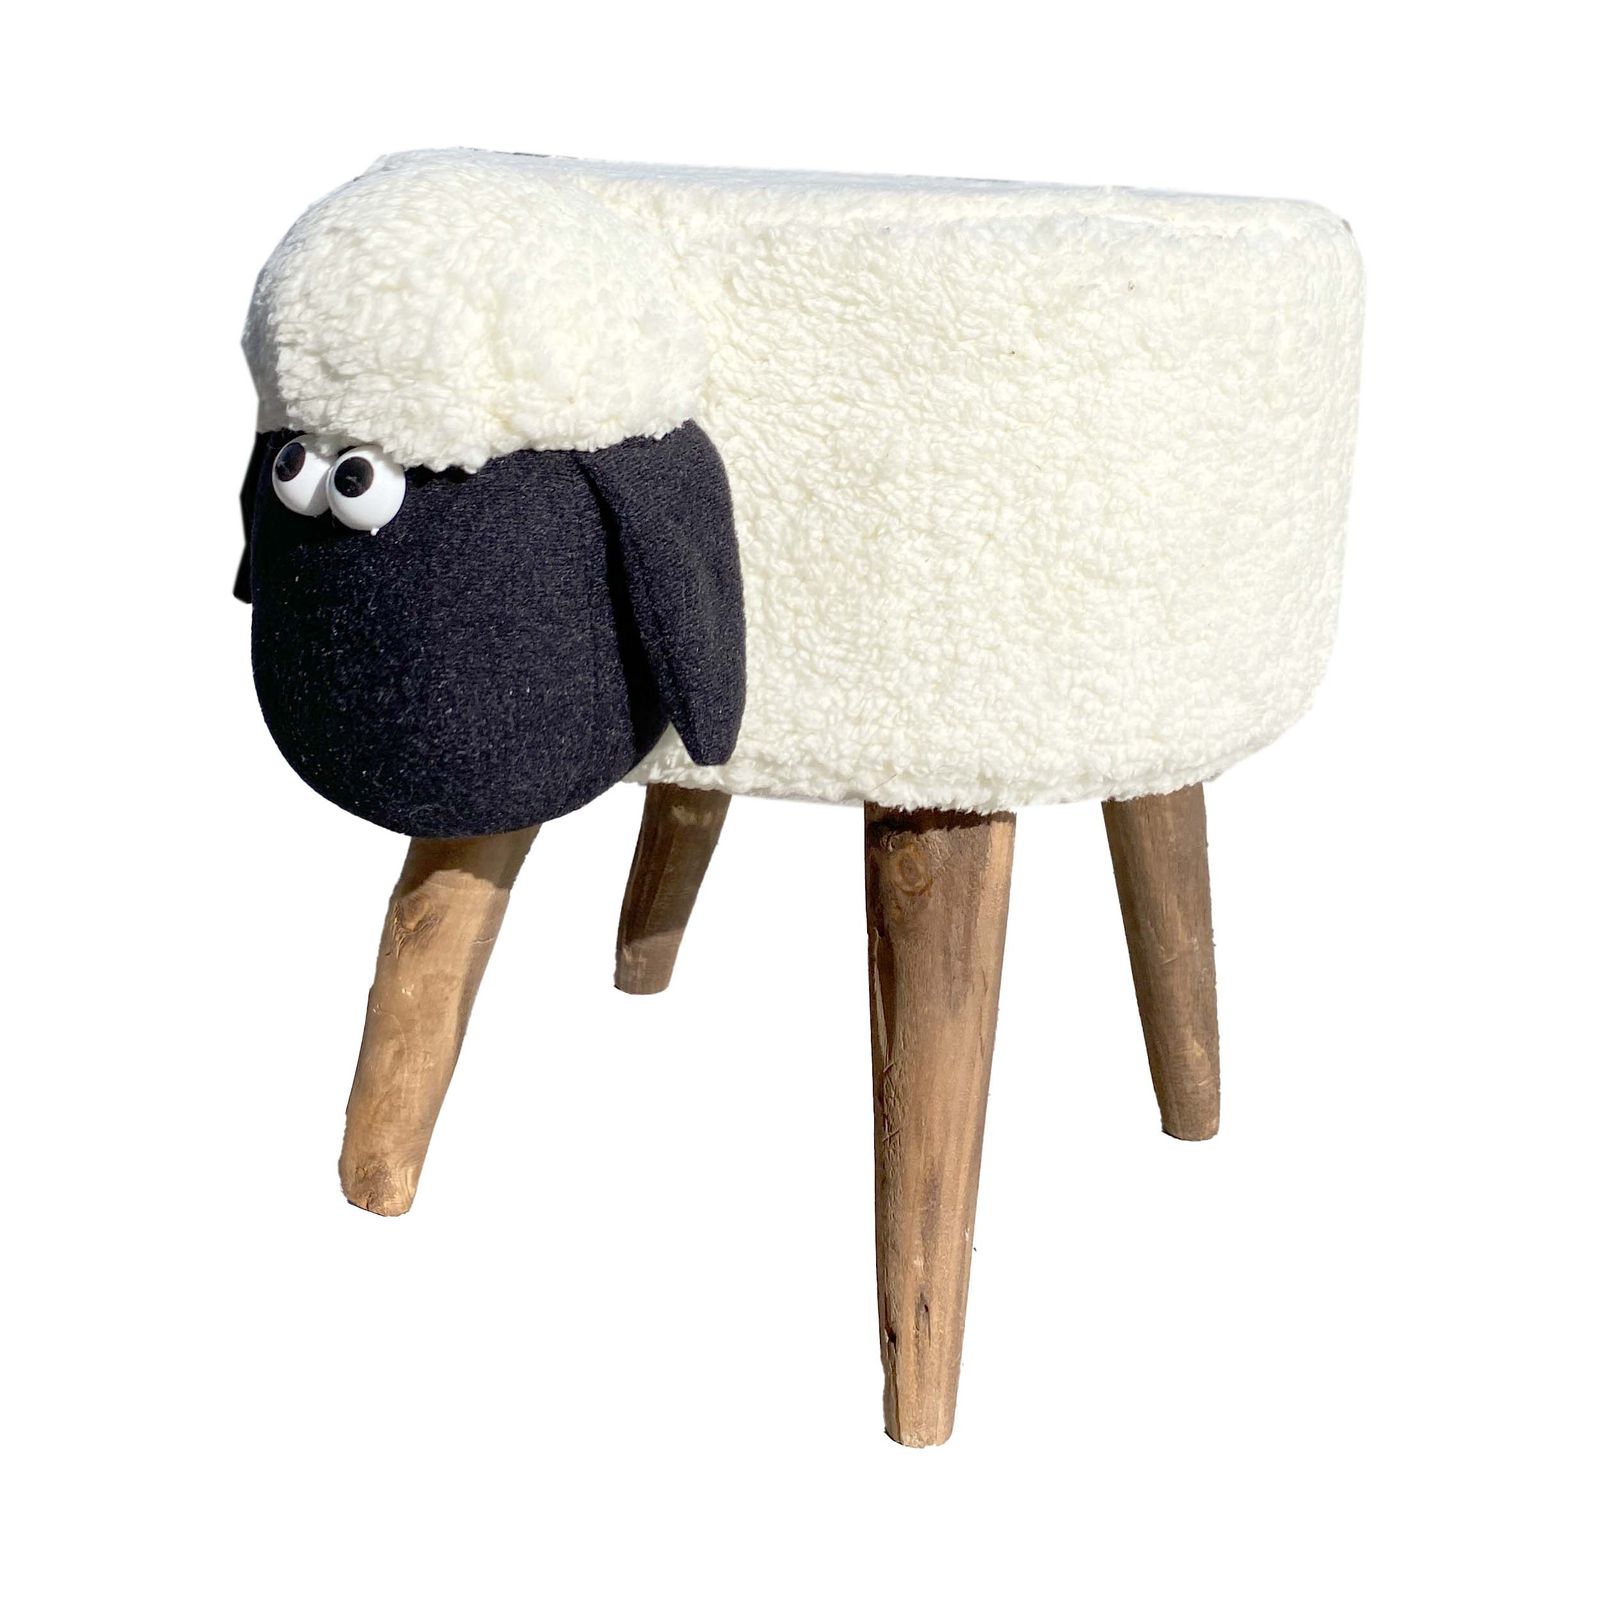 پاف کودک مدل گوسفند -  - 4